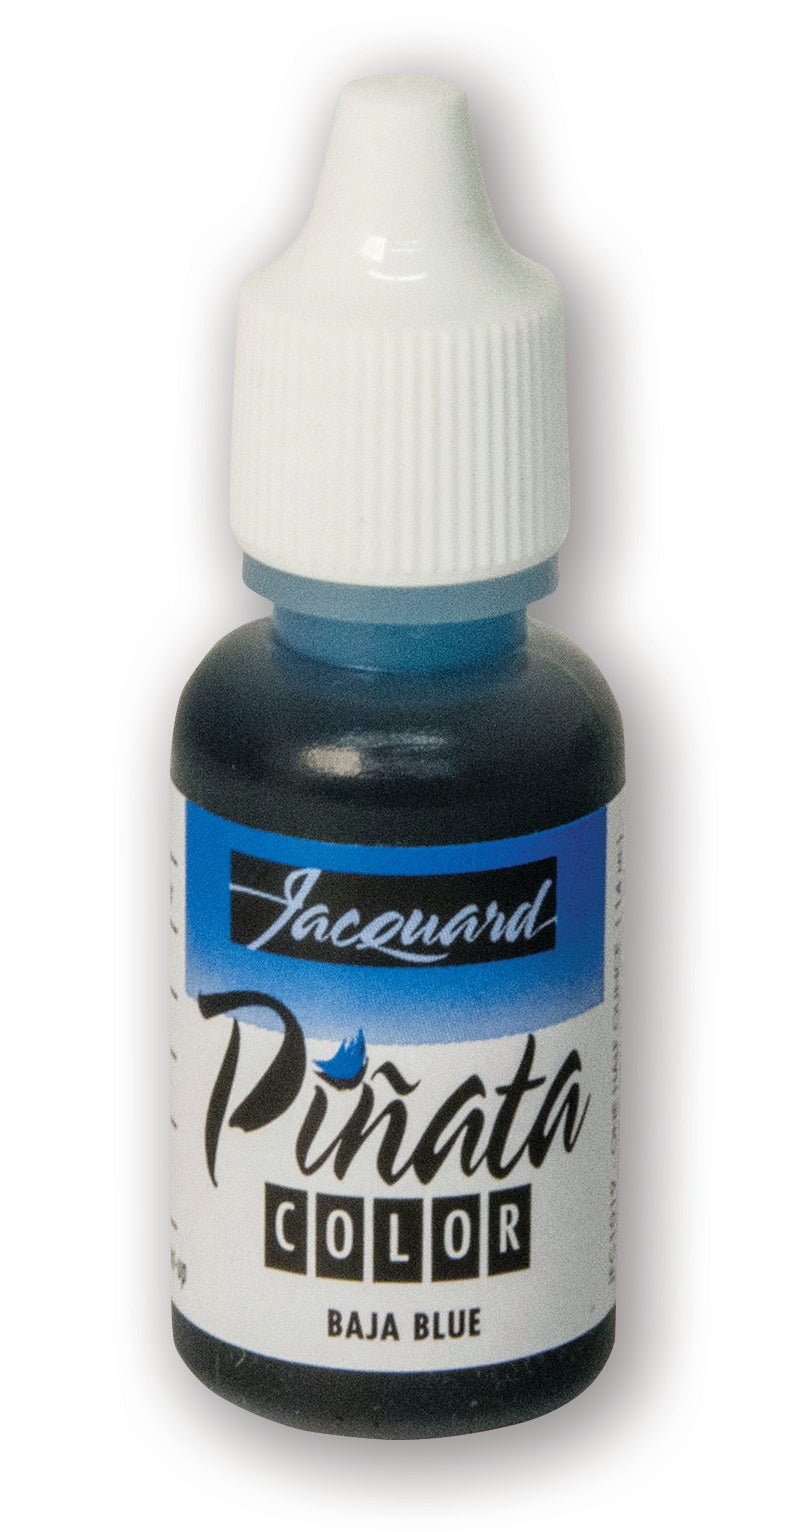 Jacquard Pinata Ink 14ml Baja Blue - theartshop.com.au